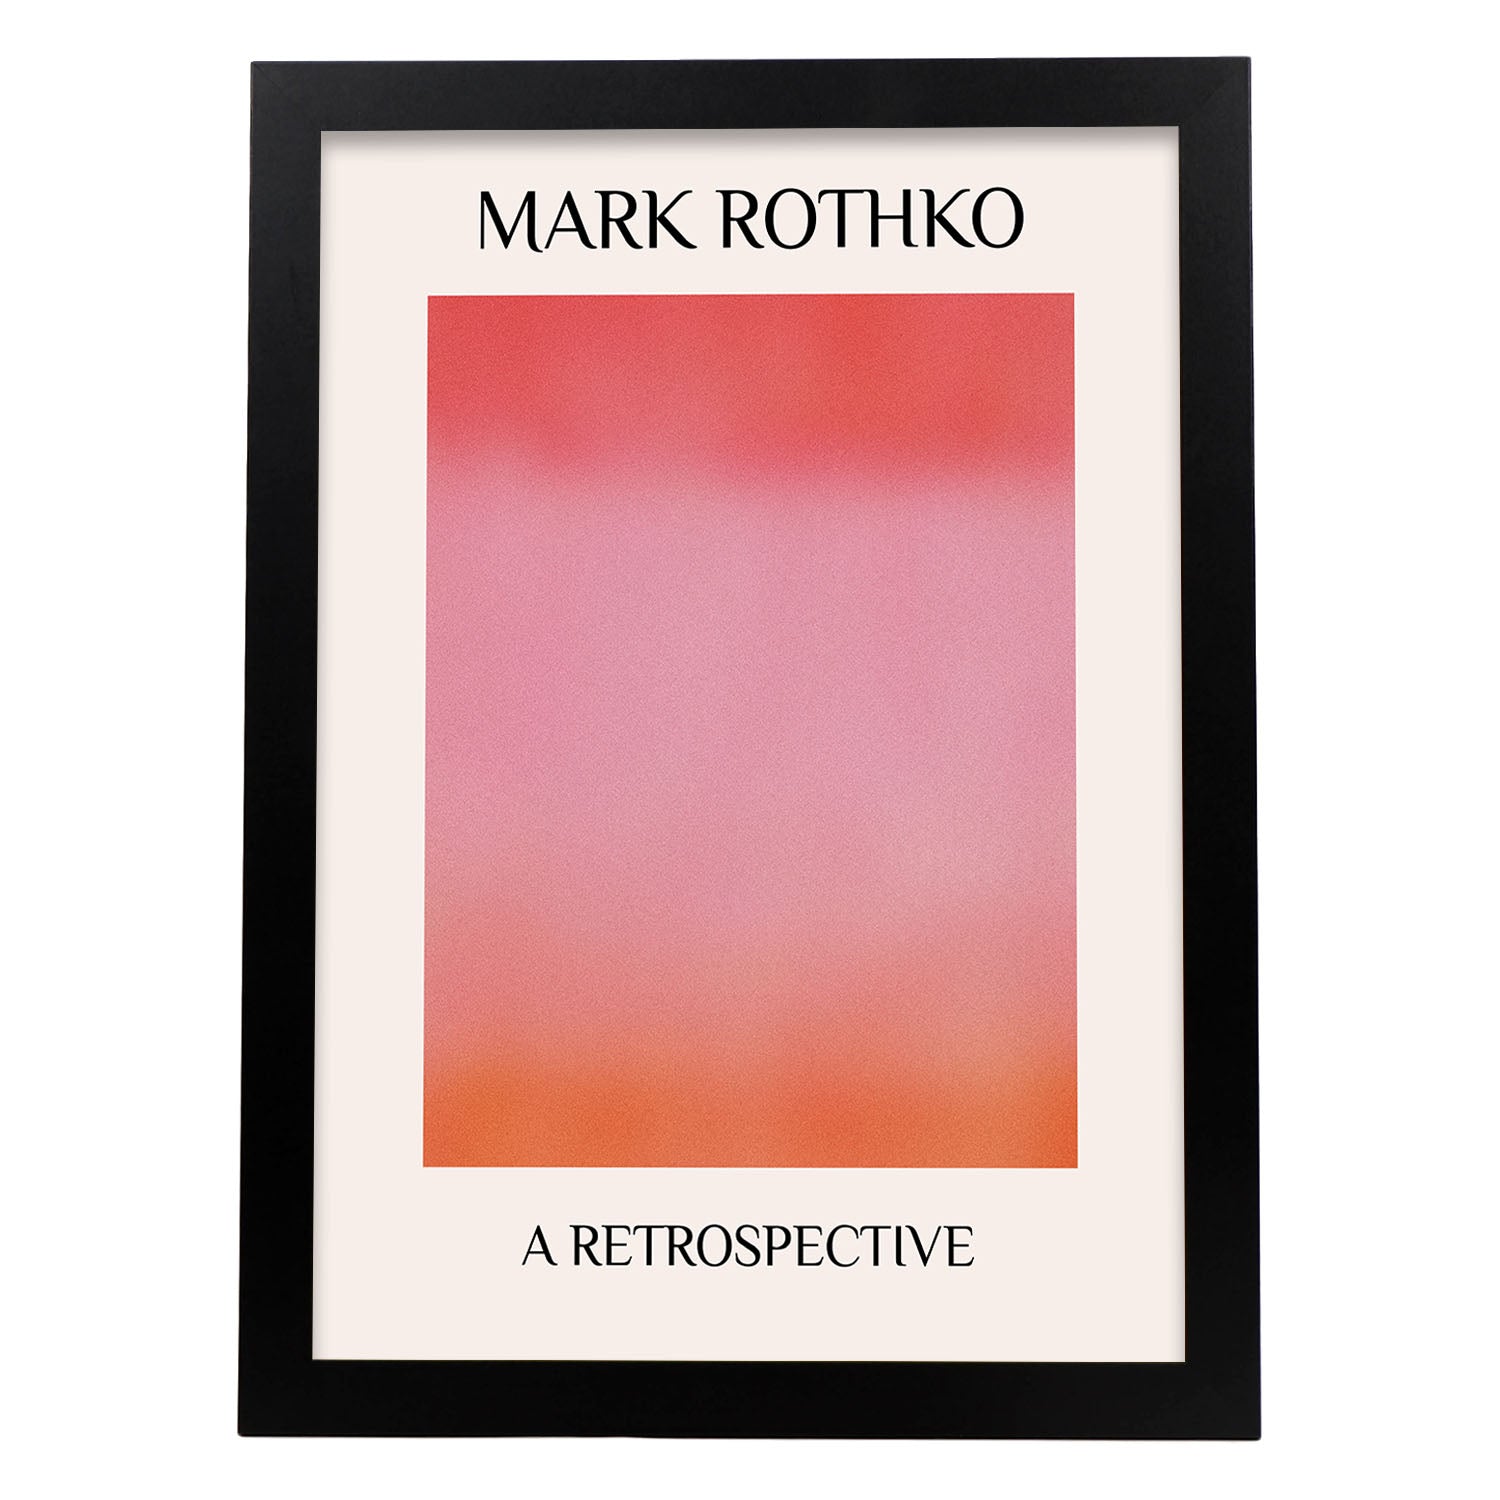 Lamina artistica decorativa con ilustración de Exposición Rothko 6 estilo expresionismo abstracto-Artwork-Nacnic-A3-Marco Negro-Nacnic Estudio SL